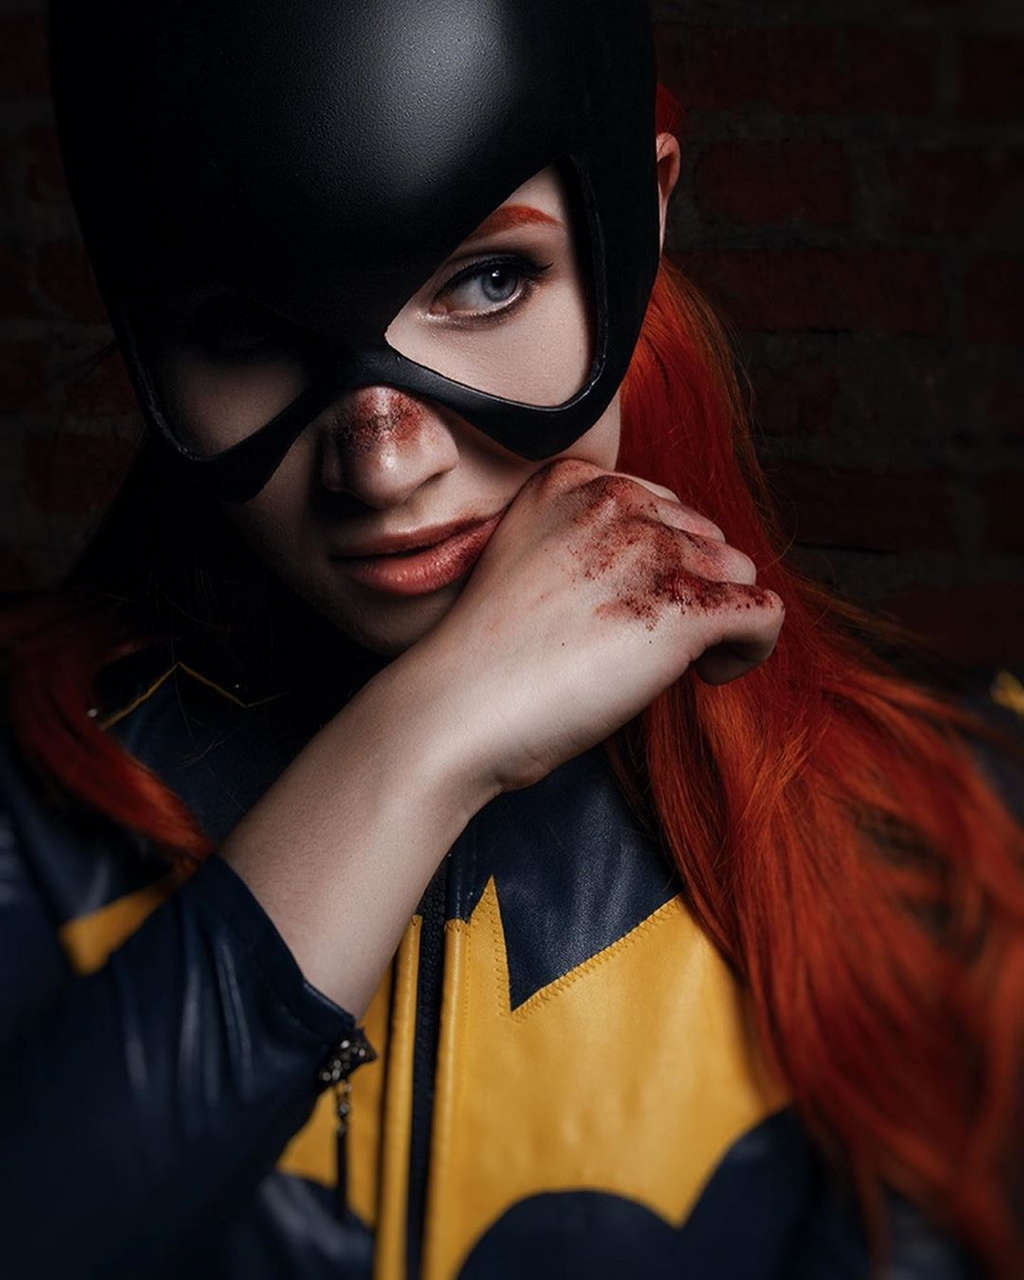 Batgirl Cosplayer Astelvert In Superheros Routine Photo By Shproto